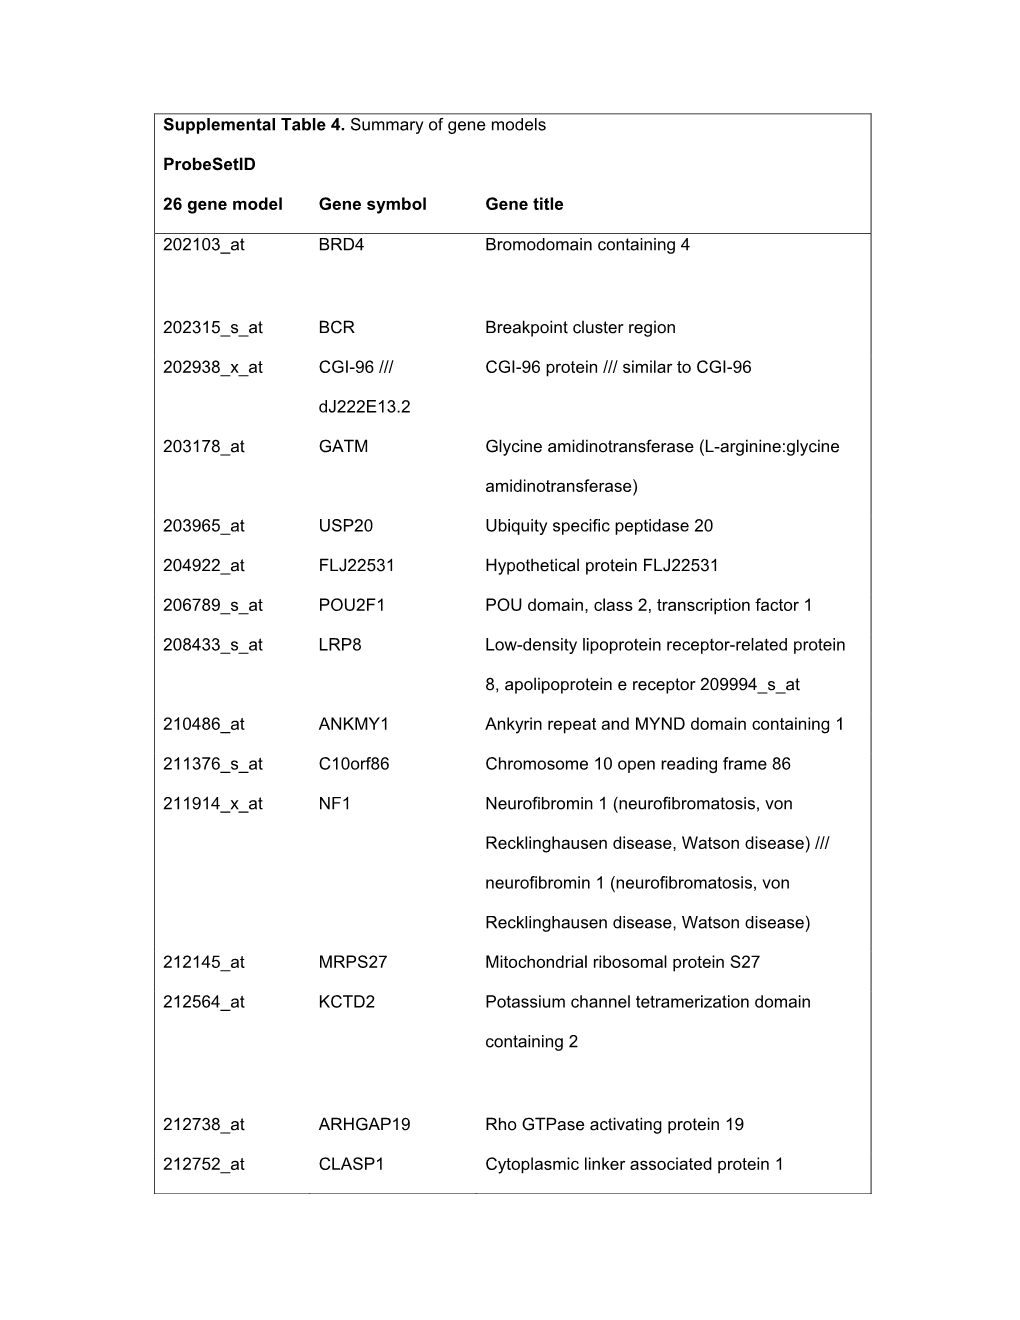 Supplemental Table 4. Summary of Gene Models Probesetid 26 Gene